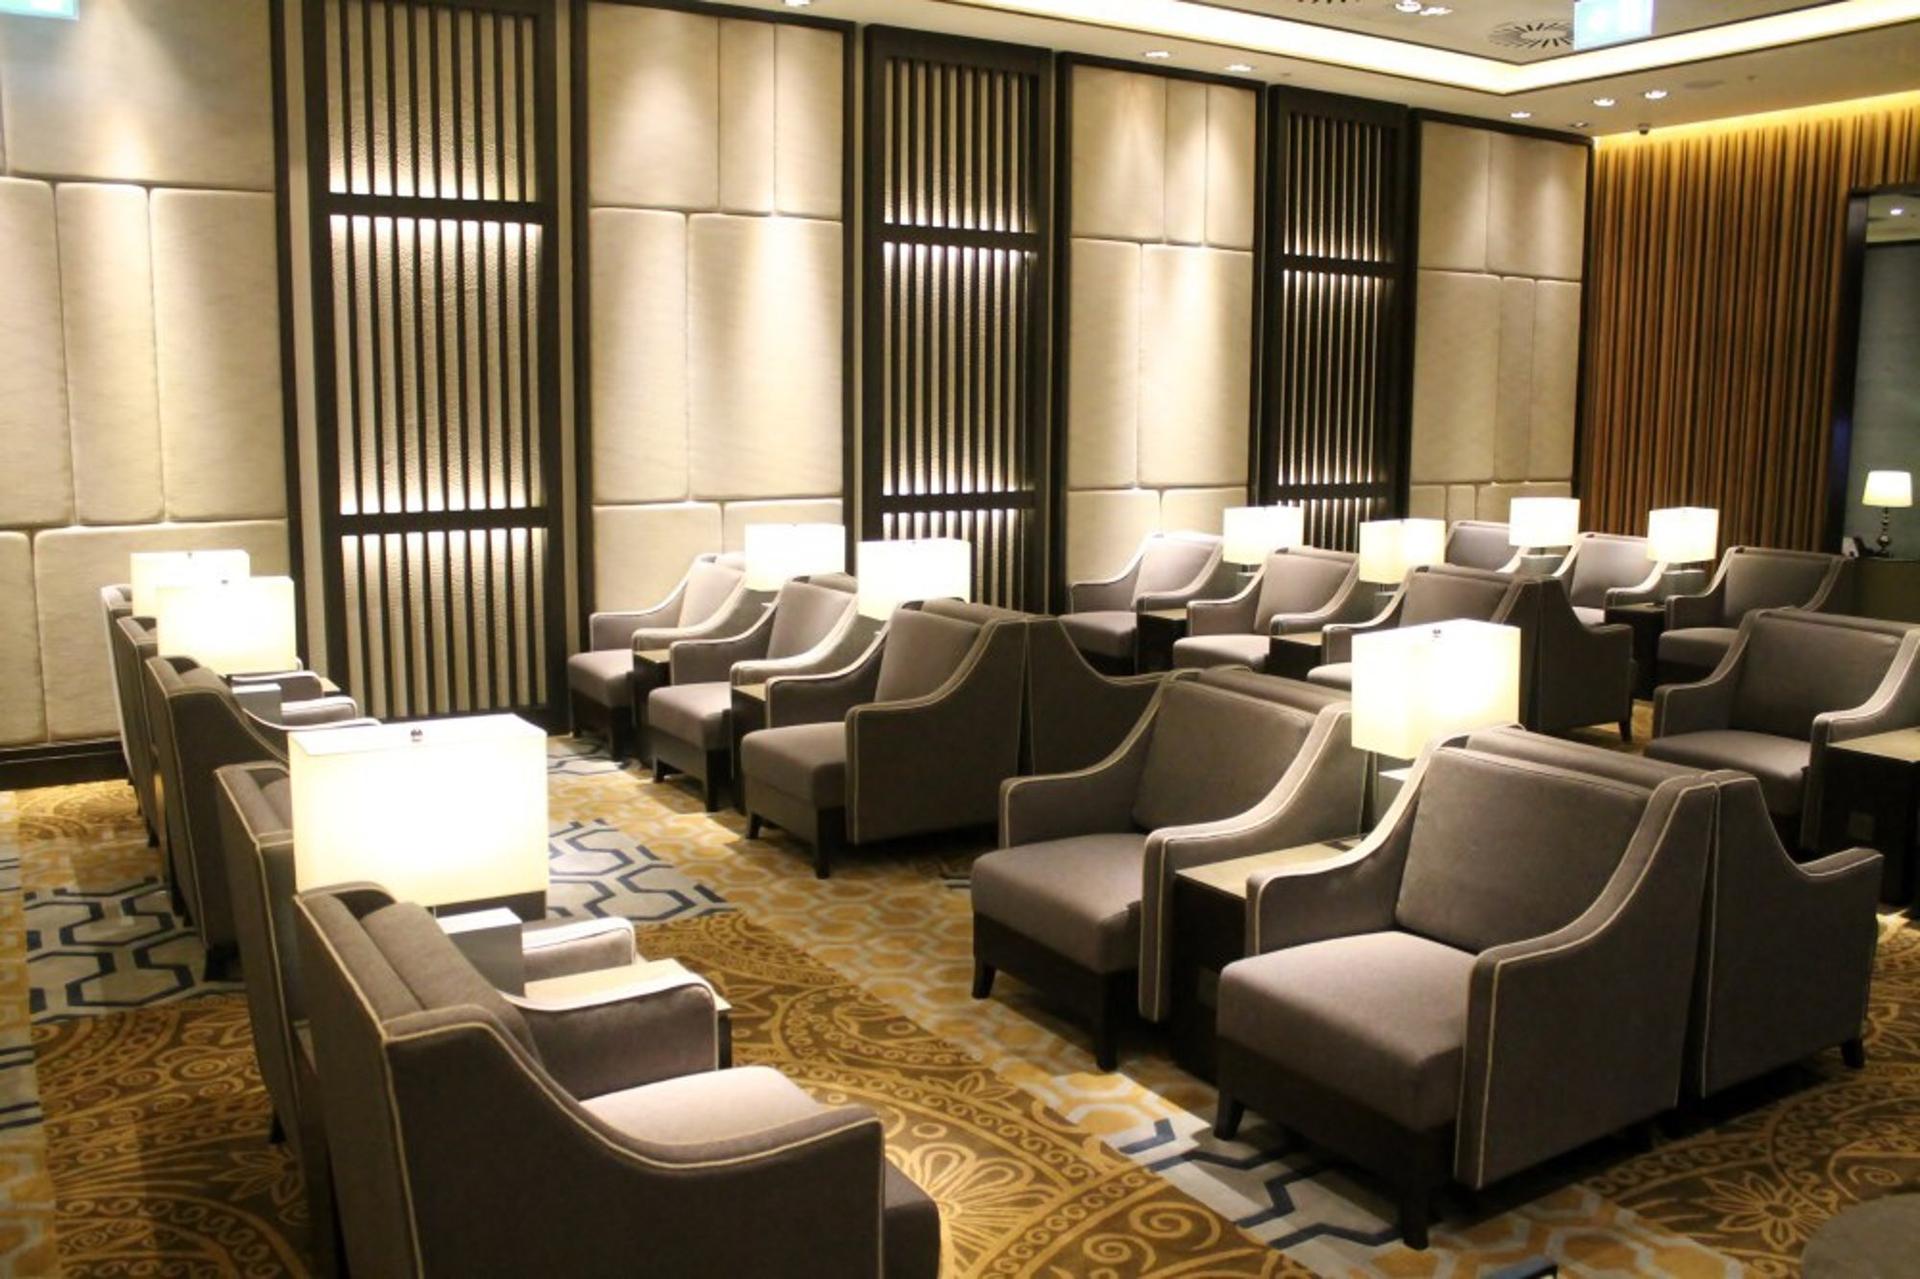 Plaza Premium Lounge image 2 of 73